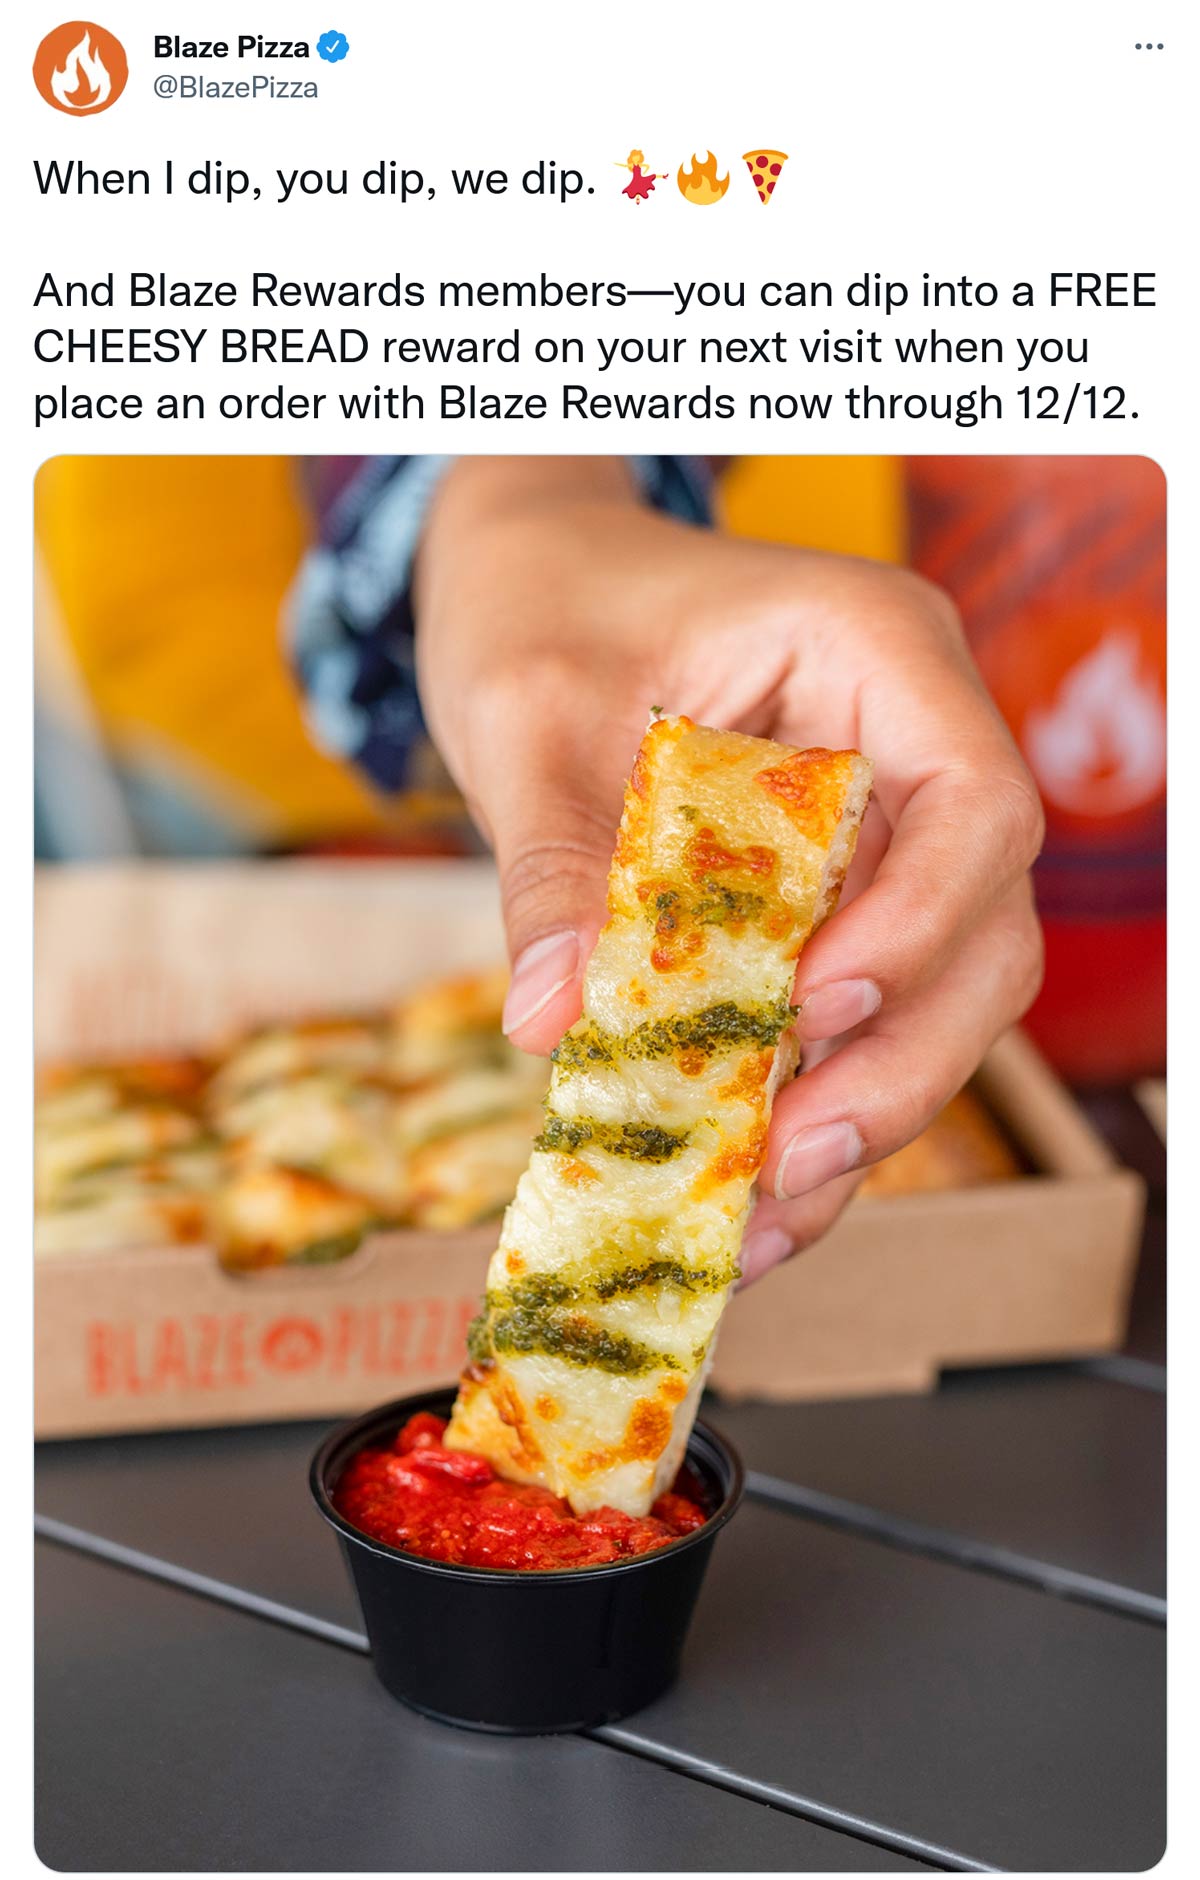 Blaze Pizza restaurants Coupon  Free cheesey bread via rewards orders at Blaze Pizza #blazepizza 